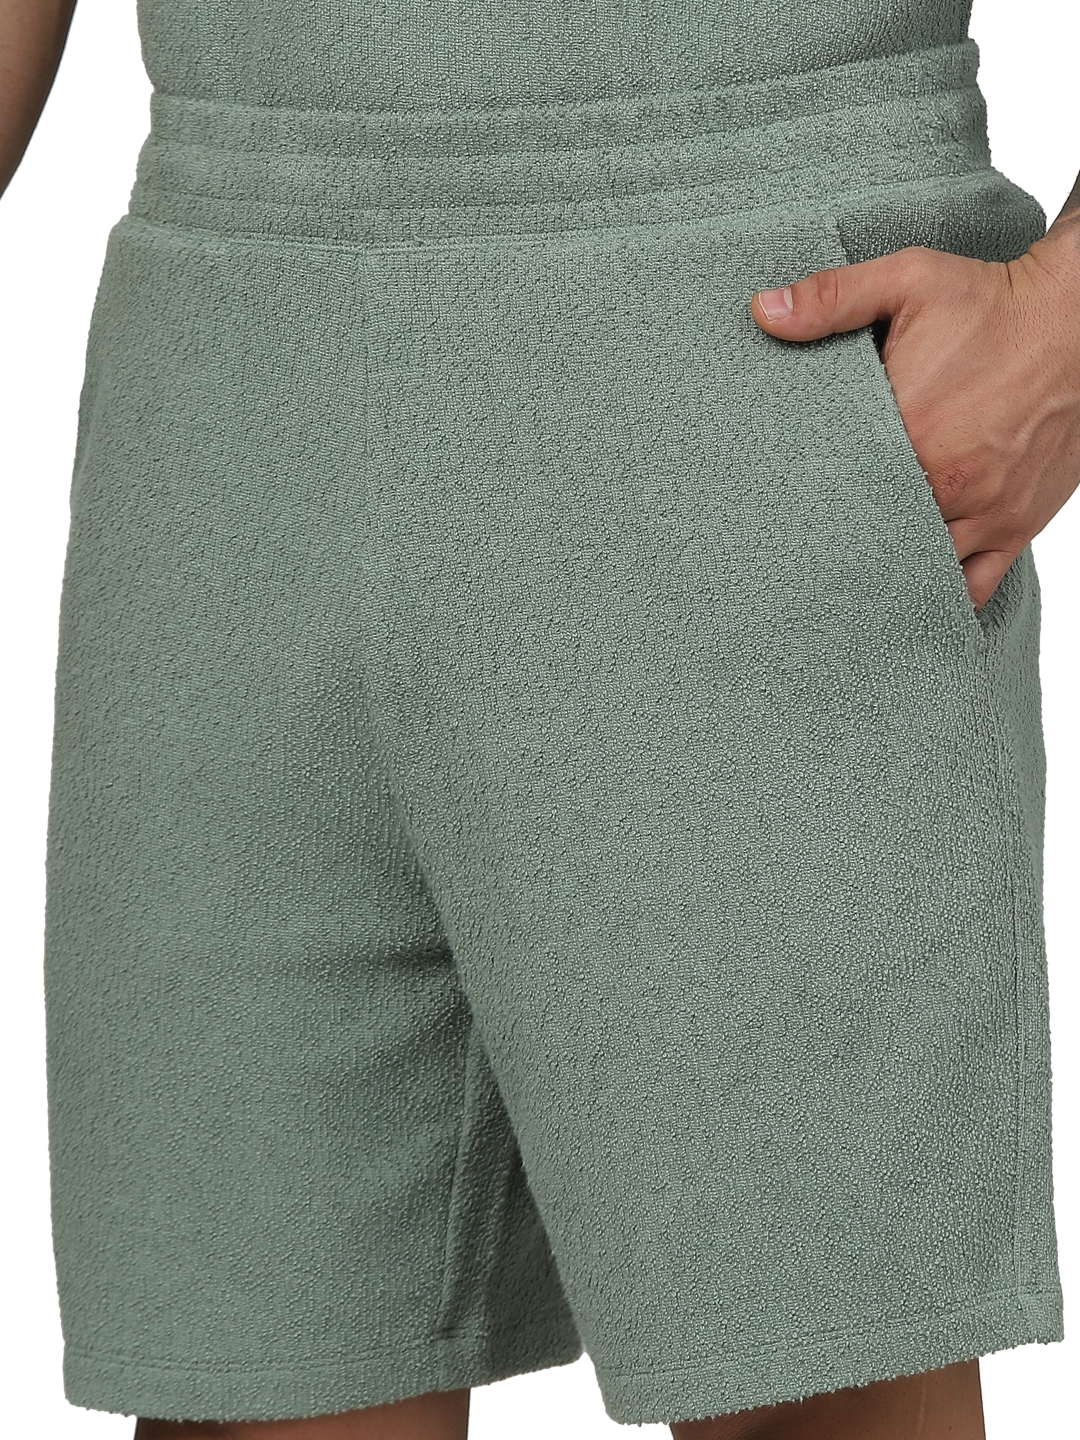 Celio Men Khaki Solid Regular Fit Cotton Fashion Casual Shorts